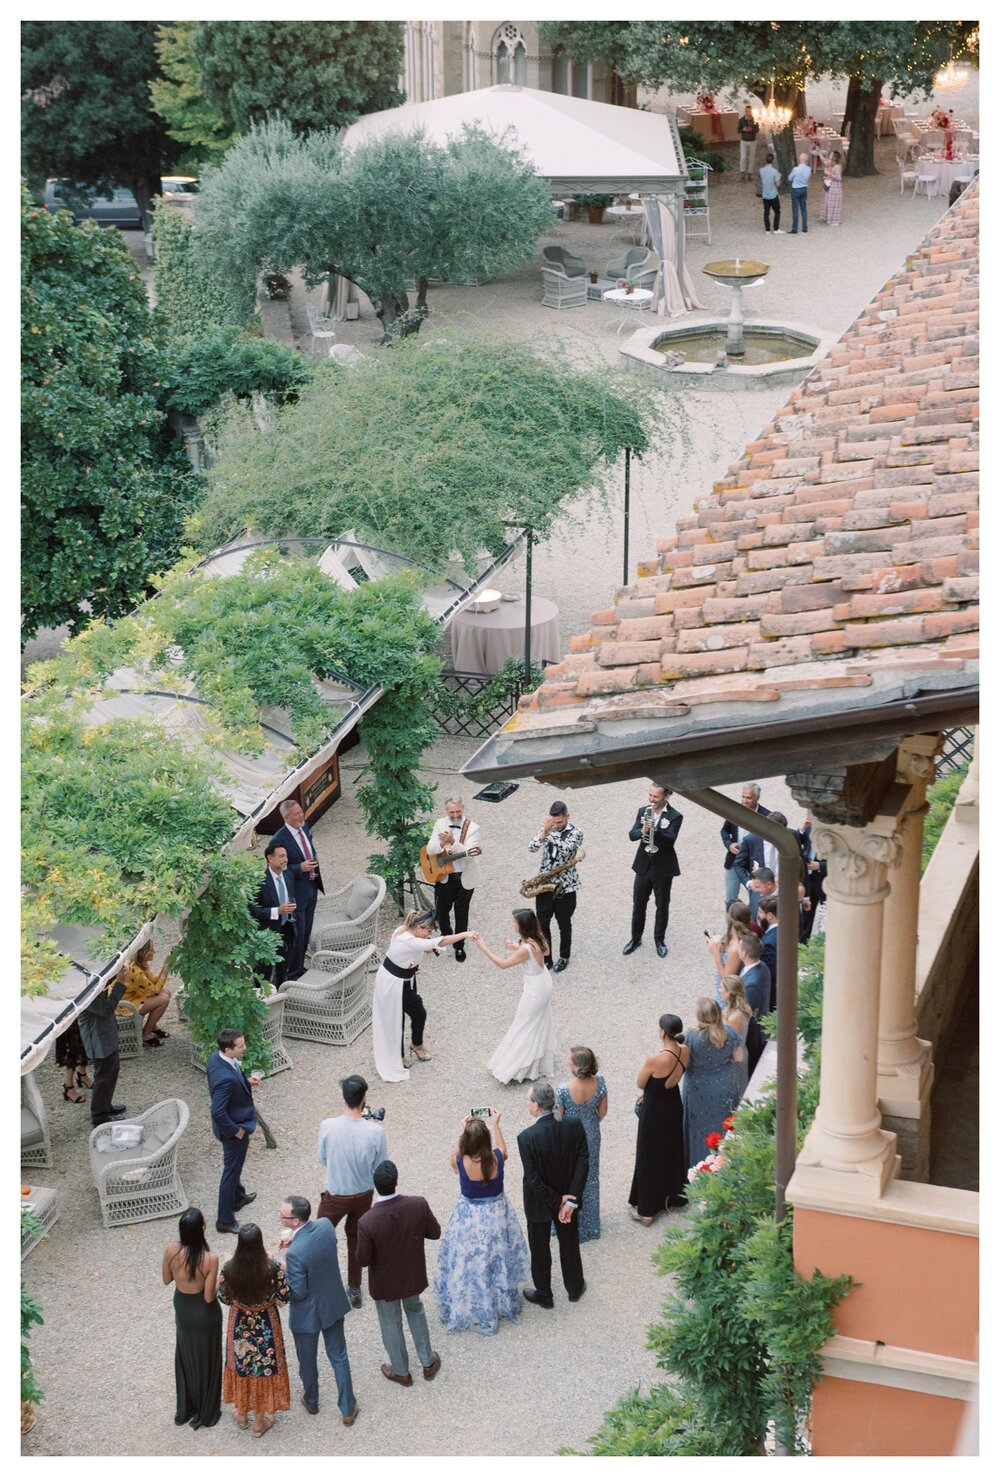  villa le fontanelle destination wedding in tuscany, florence weding venue, tuscany wedding villas, italy wedding venues tuscany, tuscany wedding photography, tuscany wedding reception  